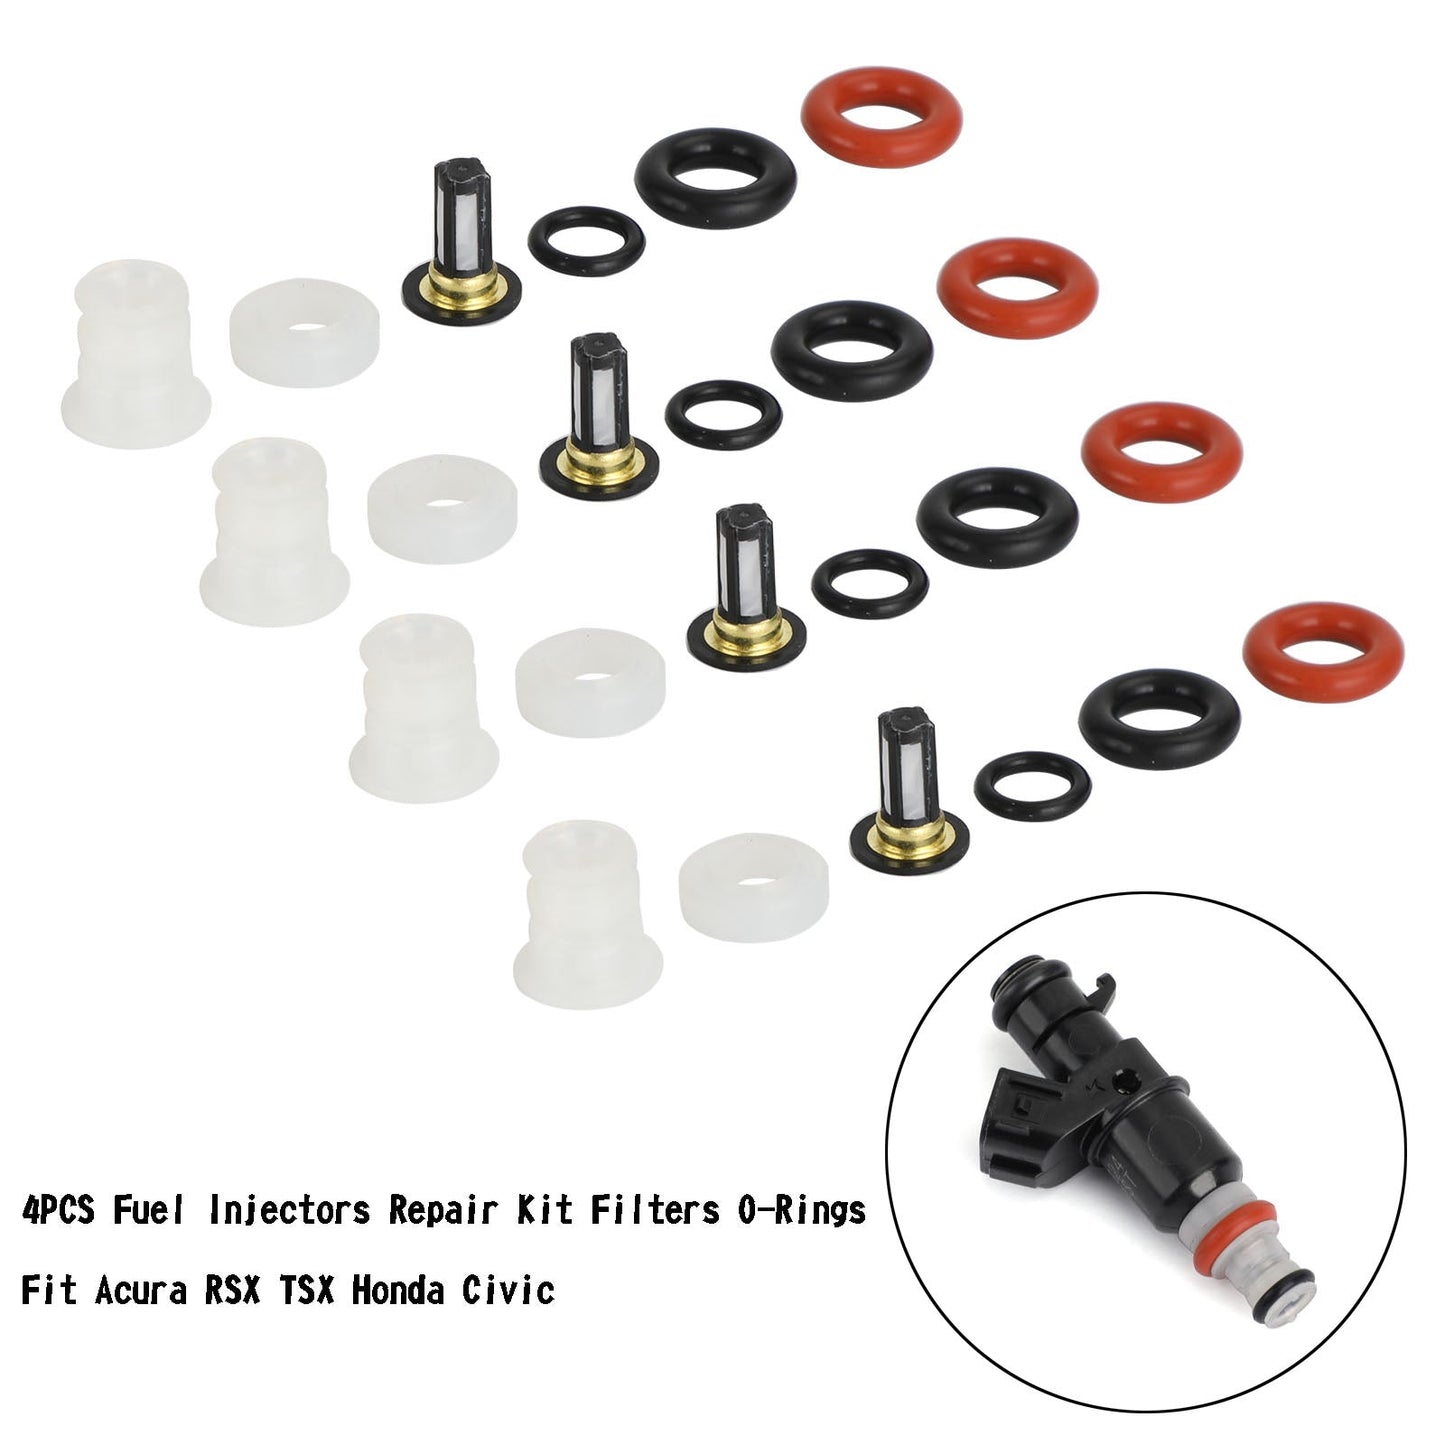 4PCS Fuel Injectors Repair Kit Filters O-Rings Fit Acura RSX TSX Fit Honda Civic